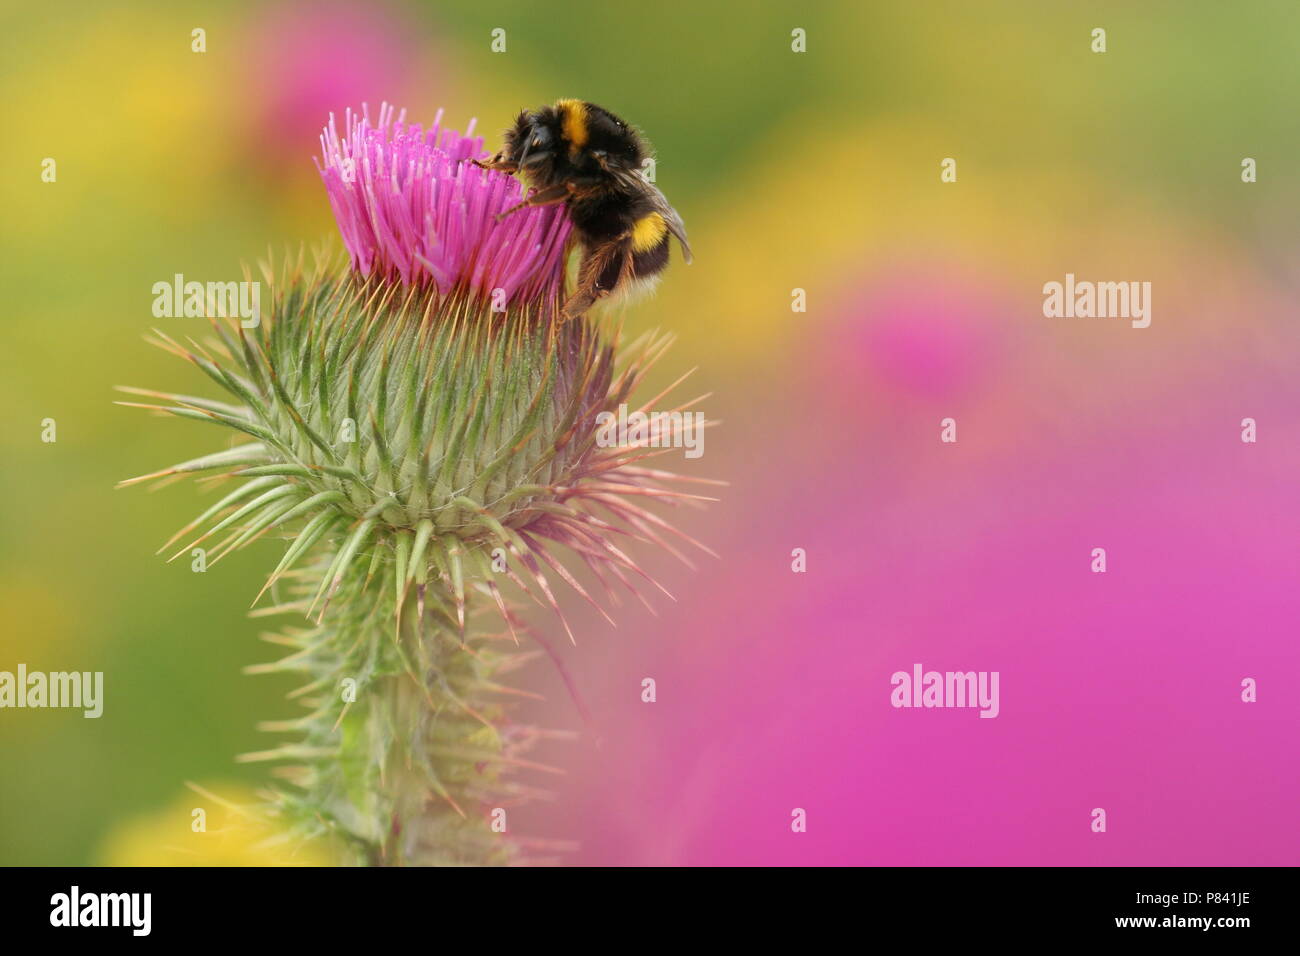 Aardhommel op distel; buff-tailed bumblebee on thistle Stock Photo